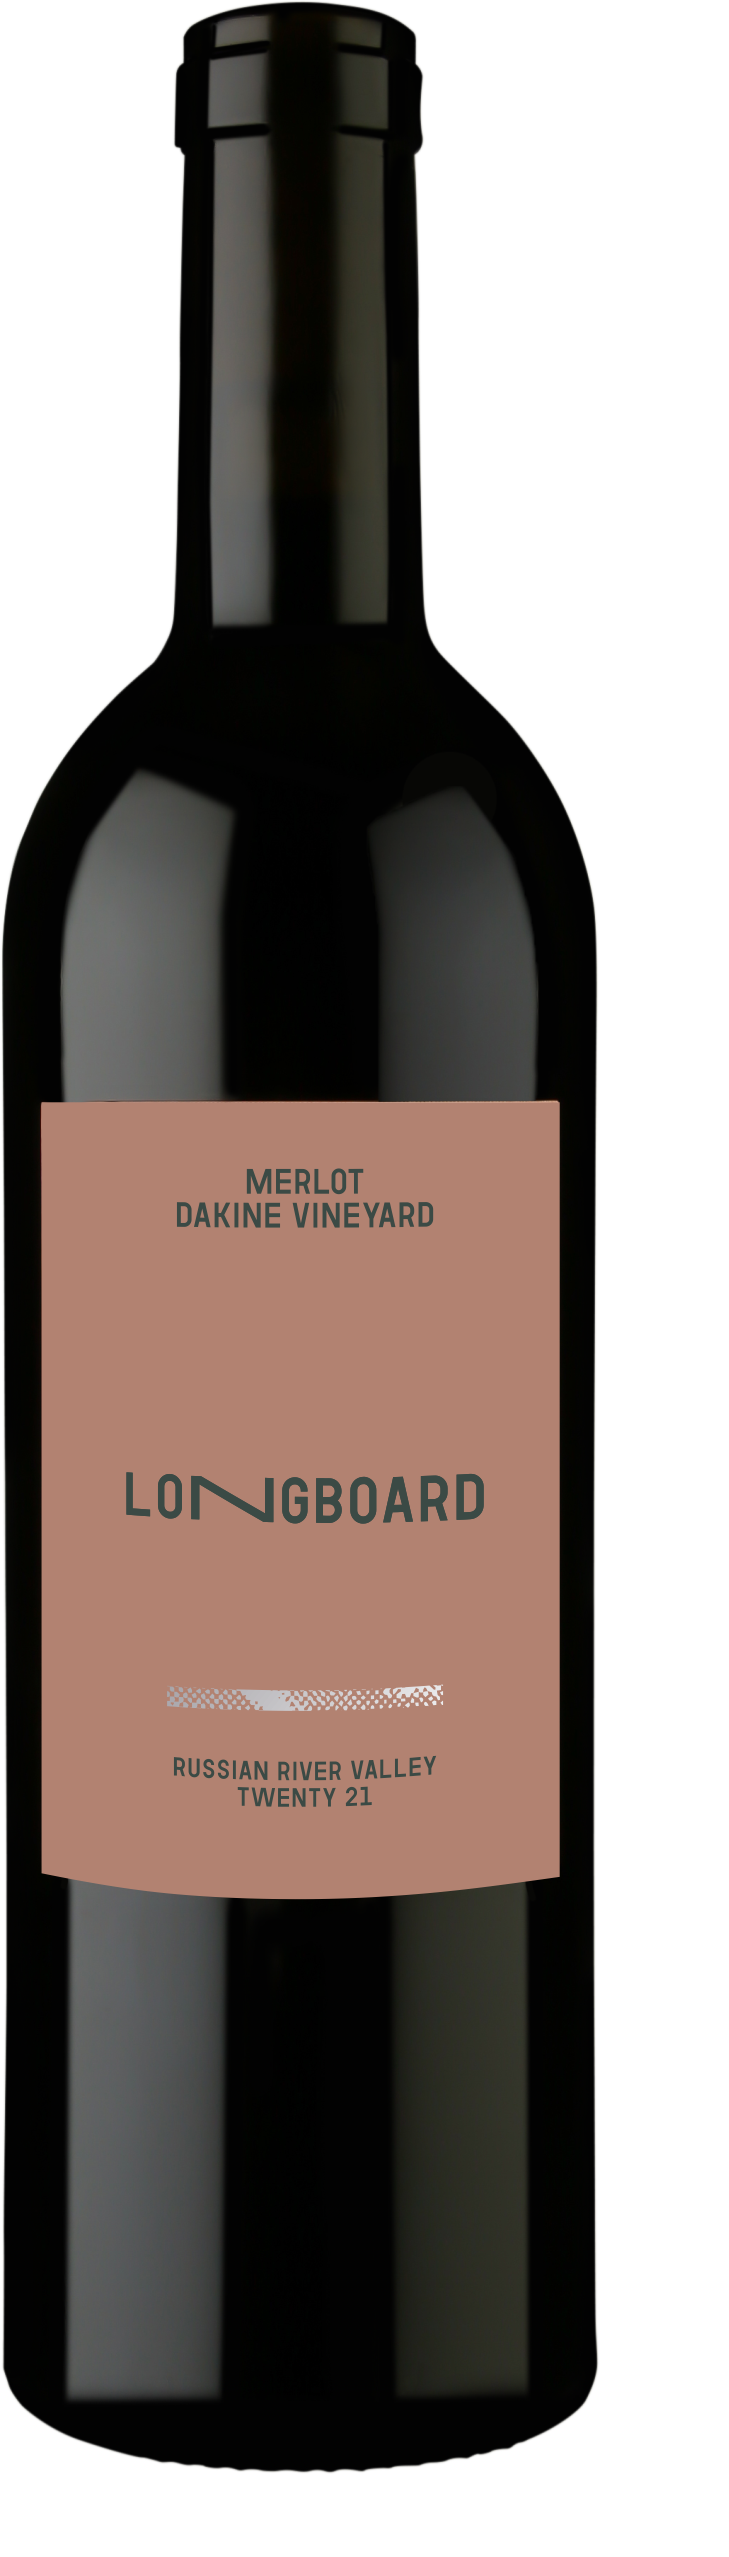 2021 Merlot - Dakine Vineyard